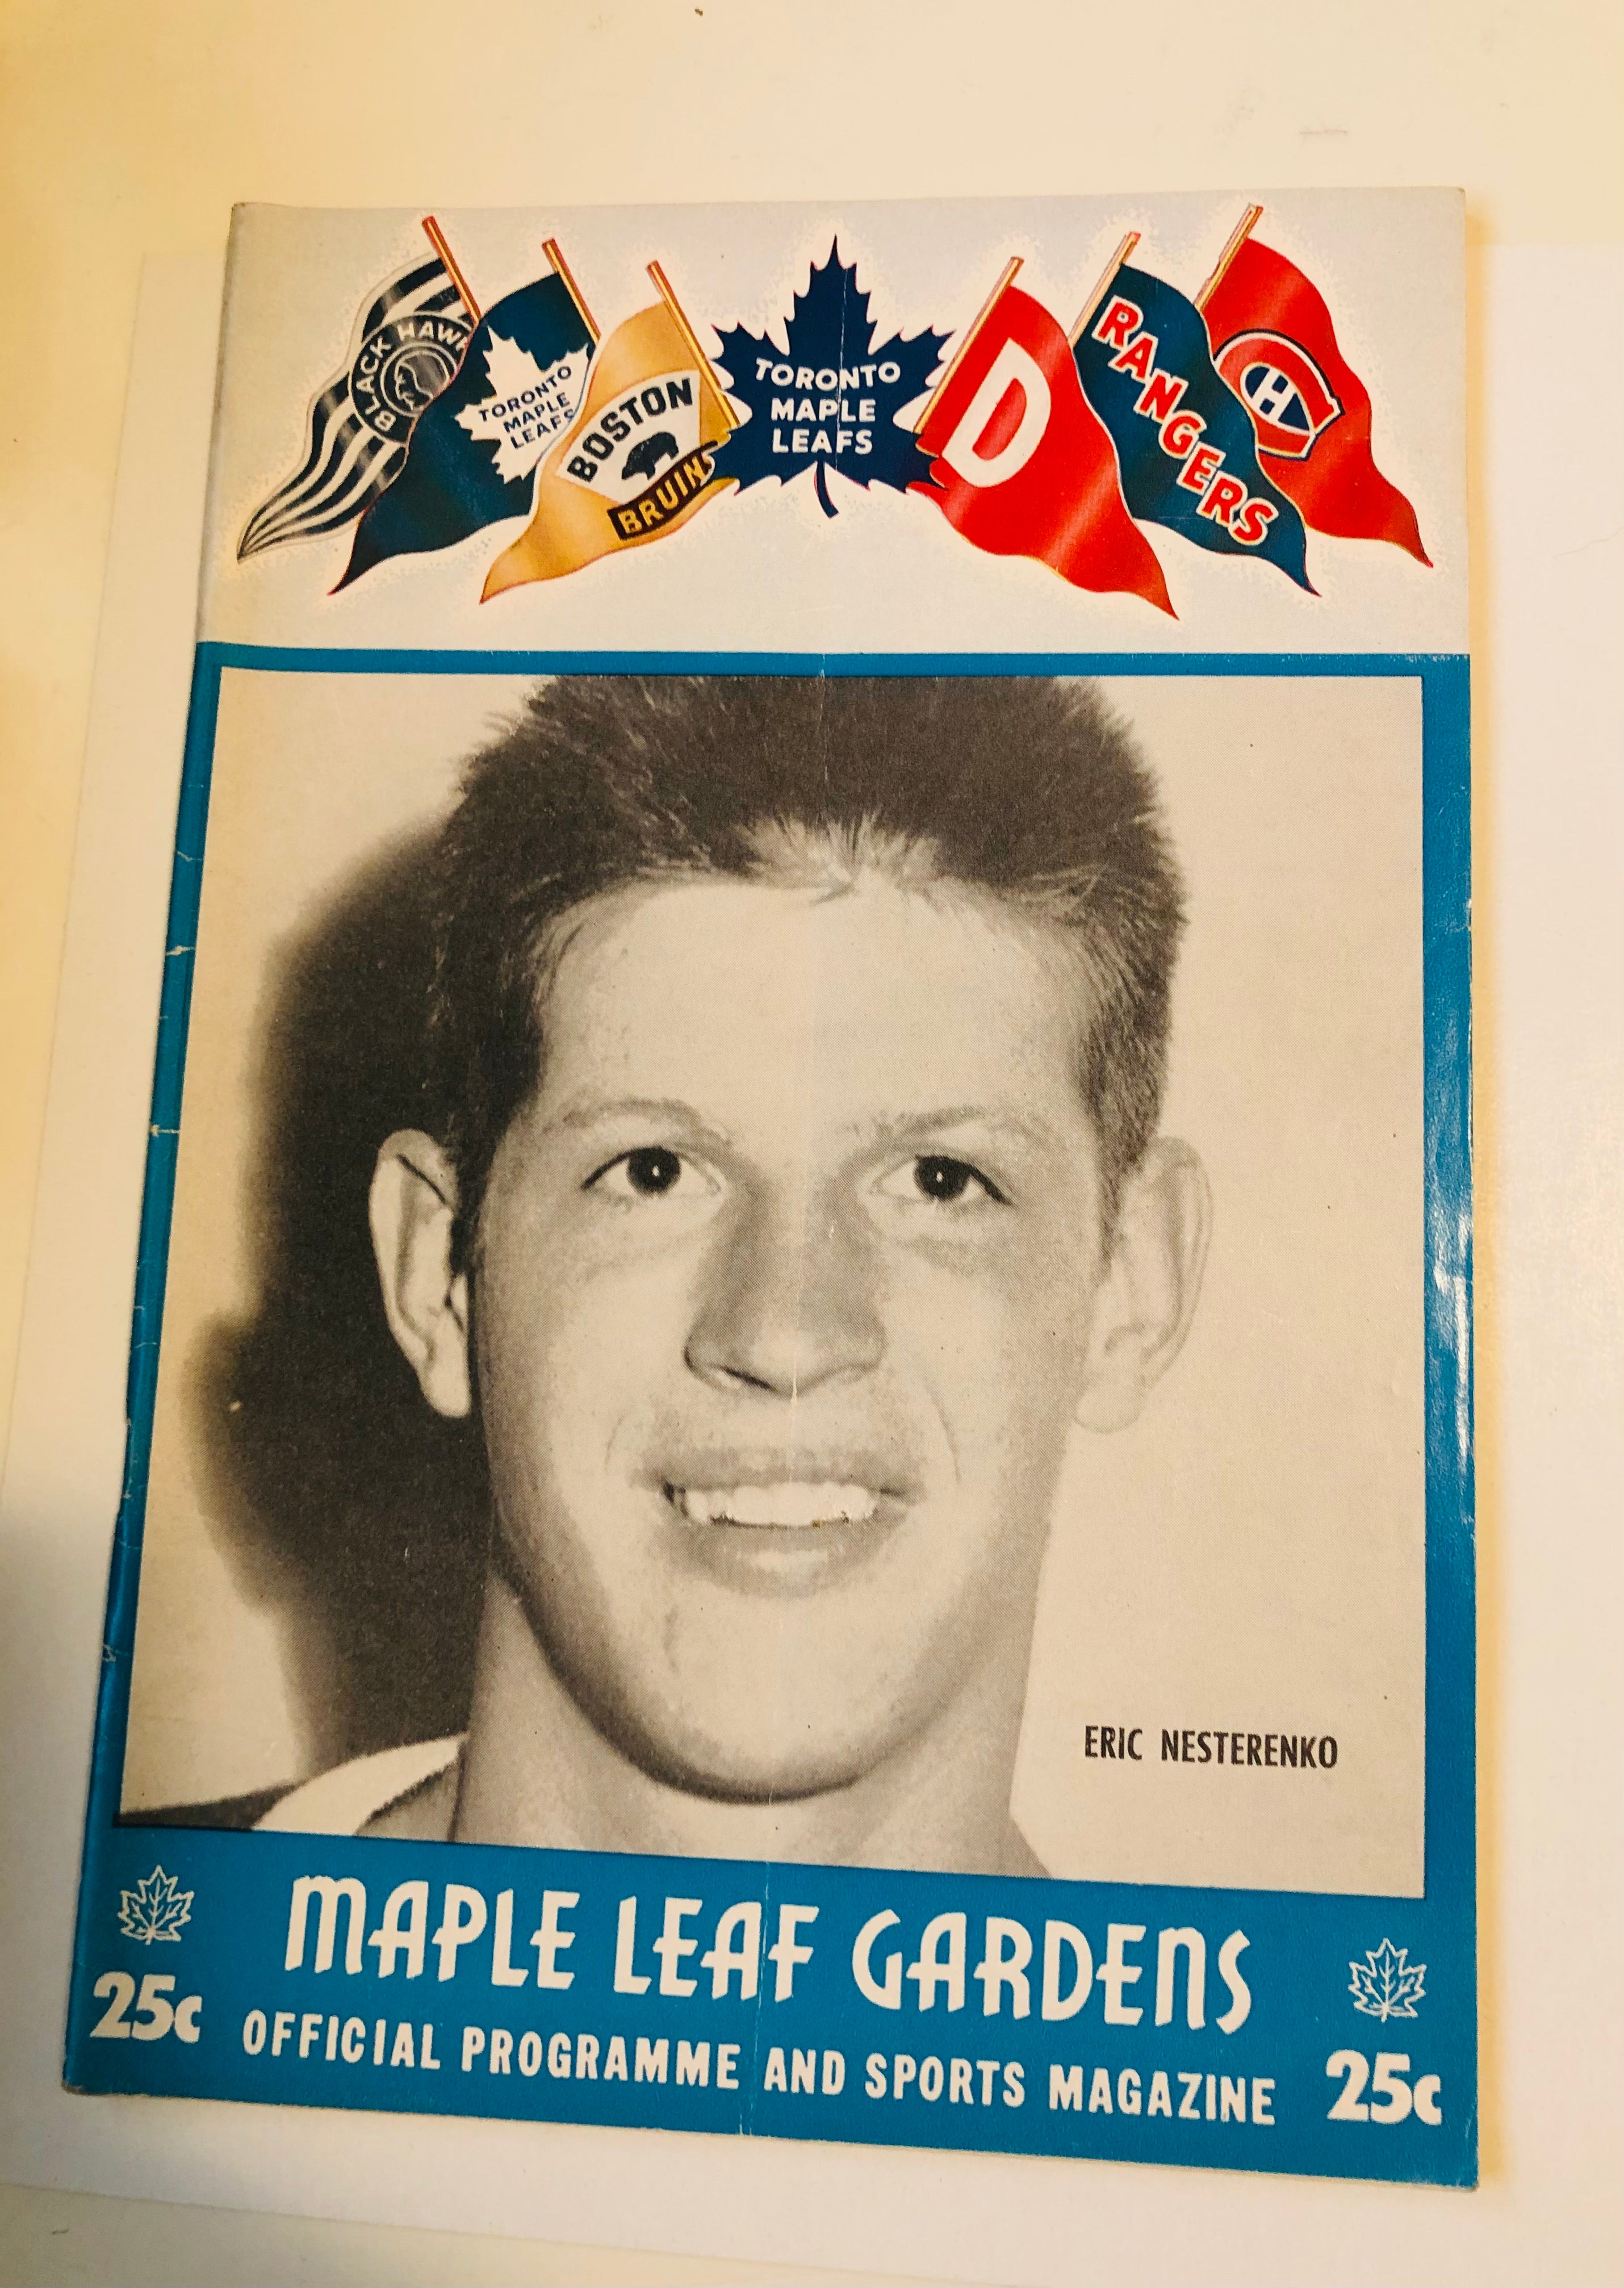 Toronto Maple Leafs hockey game program Nov.15,1955